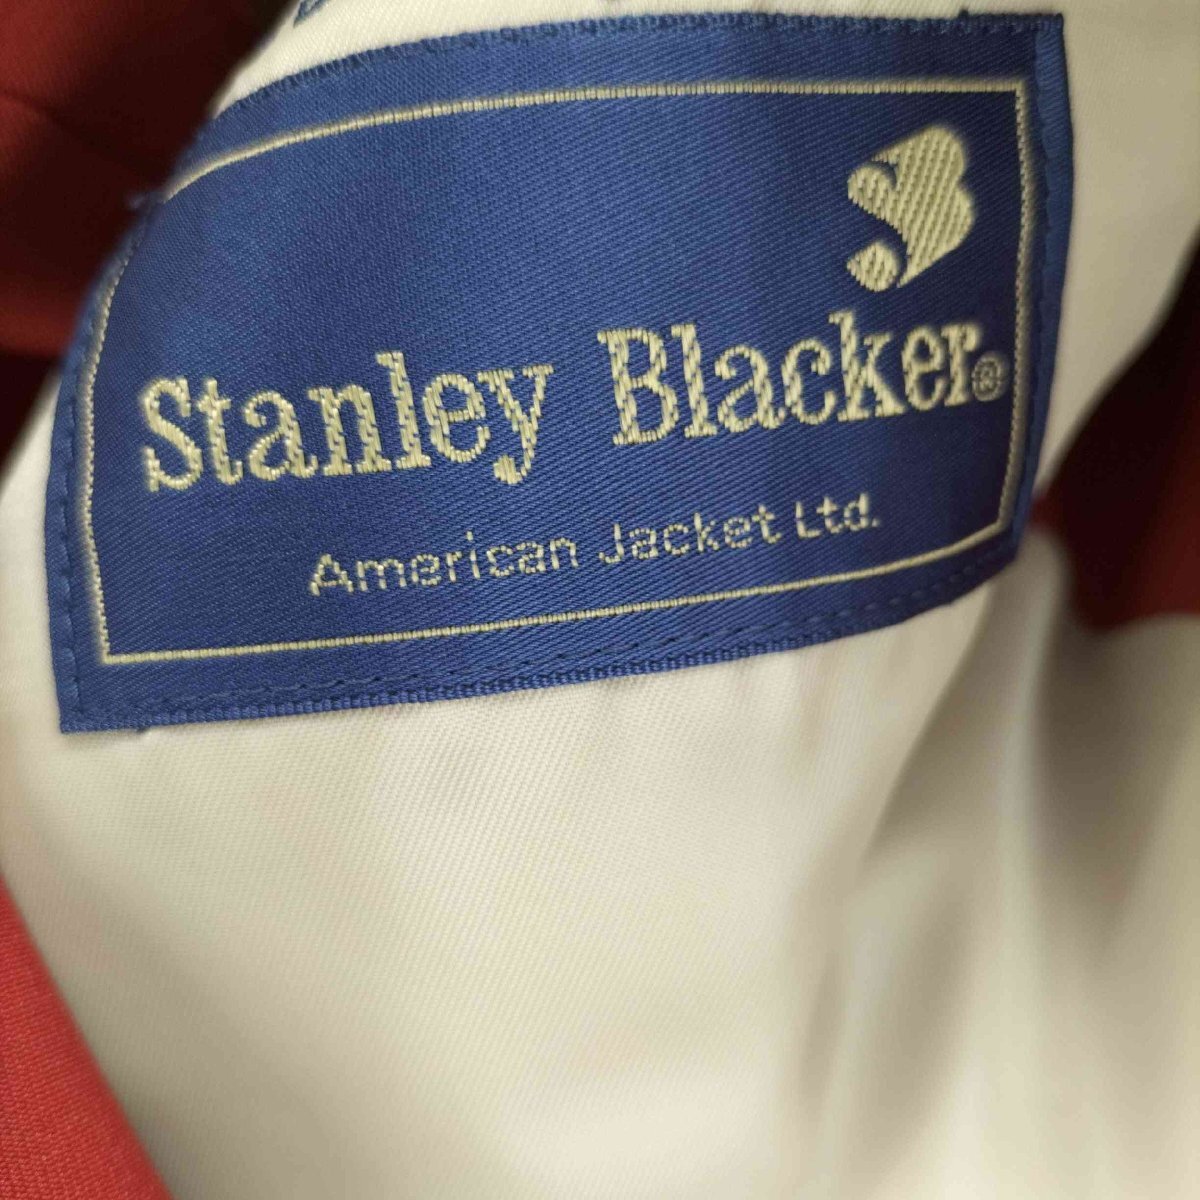 stanley blacker(スタンリーブラッカー) American Jacket エンブレムボタン 中古 古着 1149の画像6